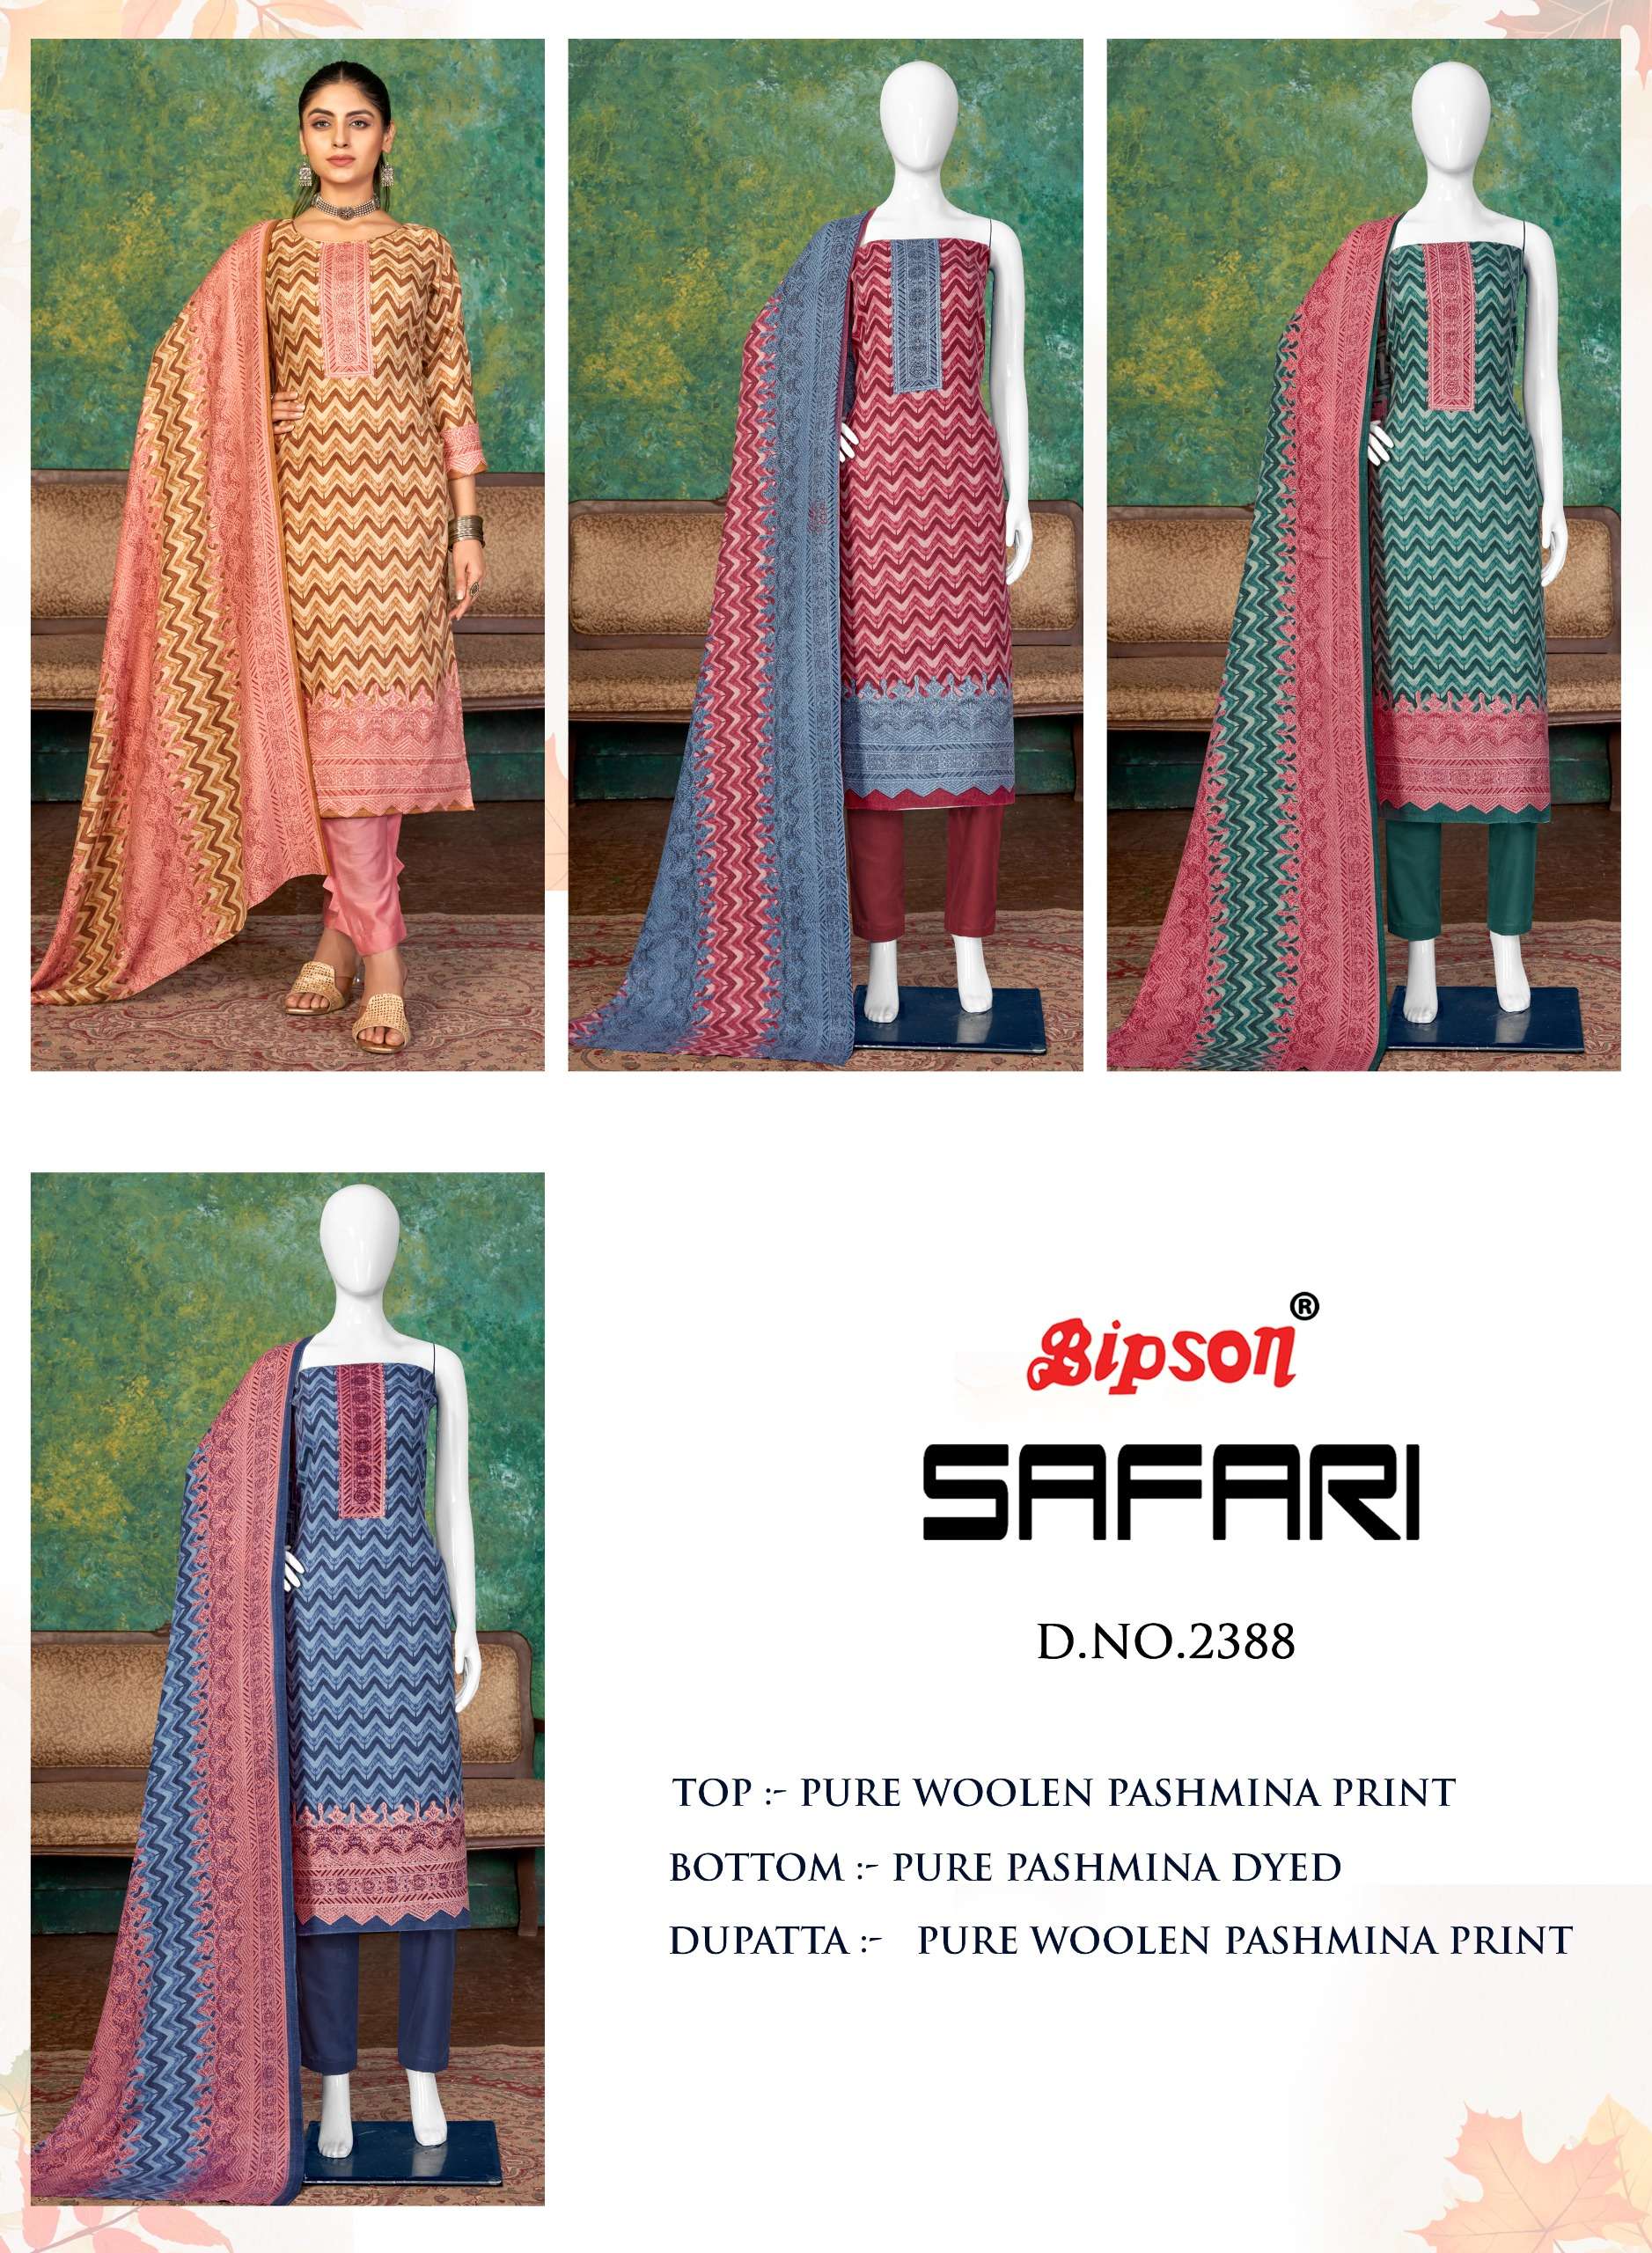 bipson safari 2388 colour series latest wedding wear pakistani salwar kameez wholesaler surat